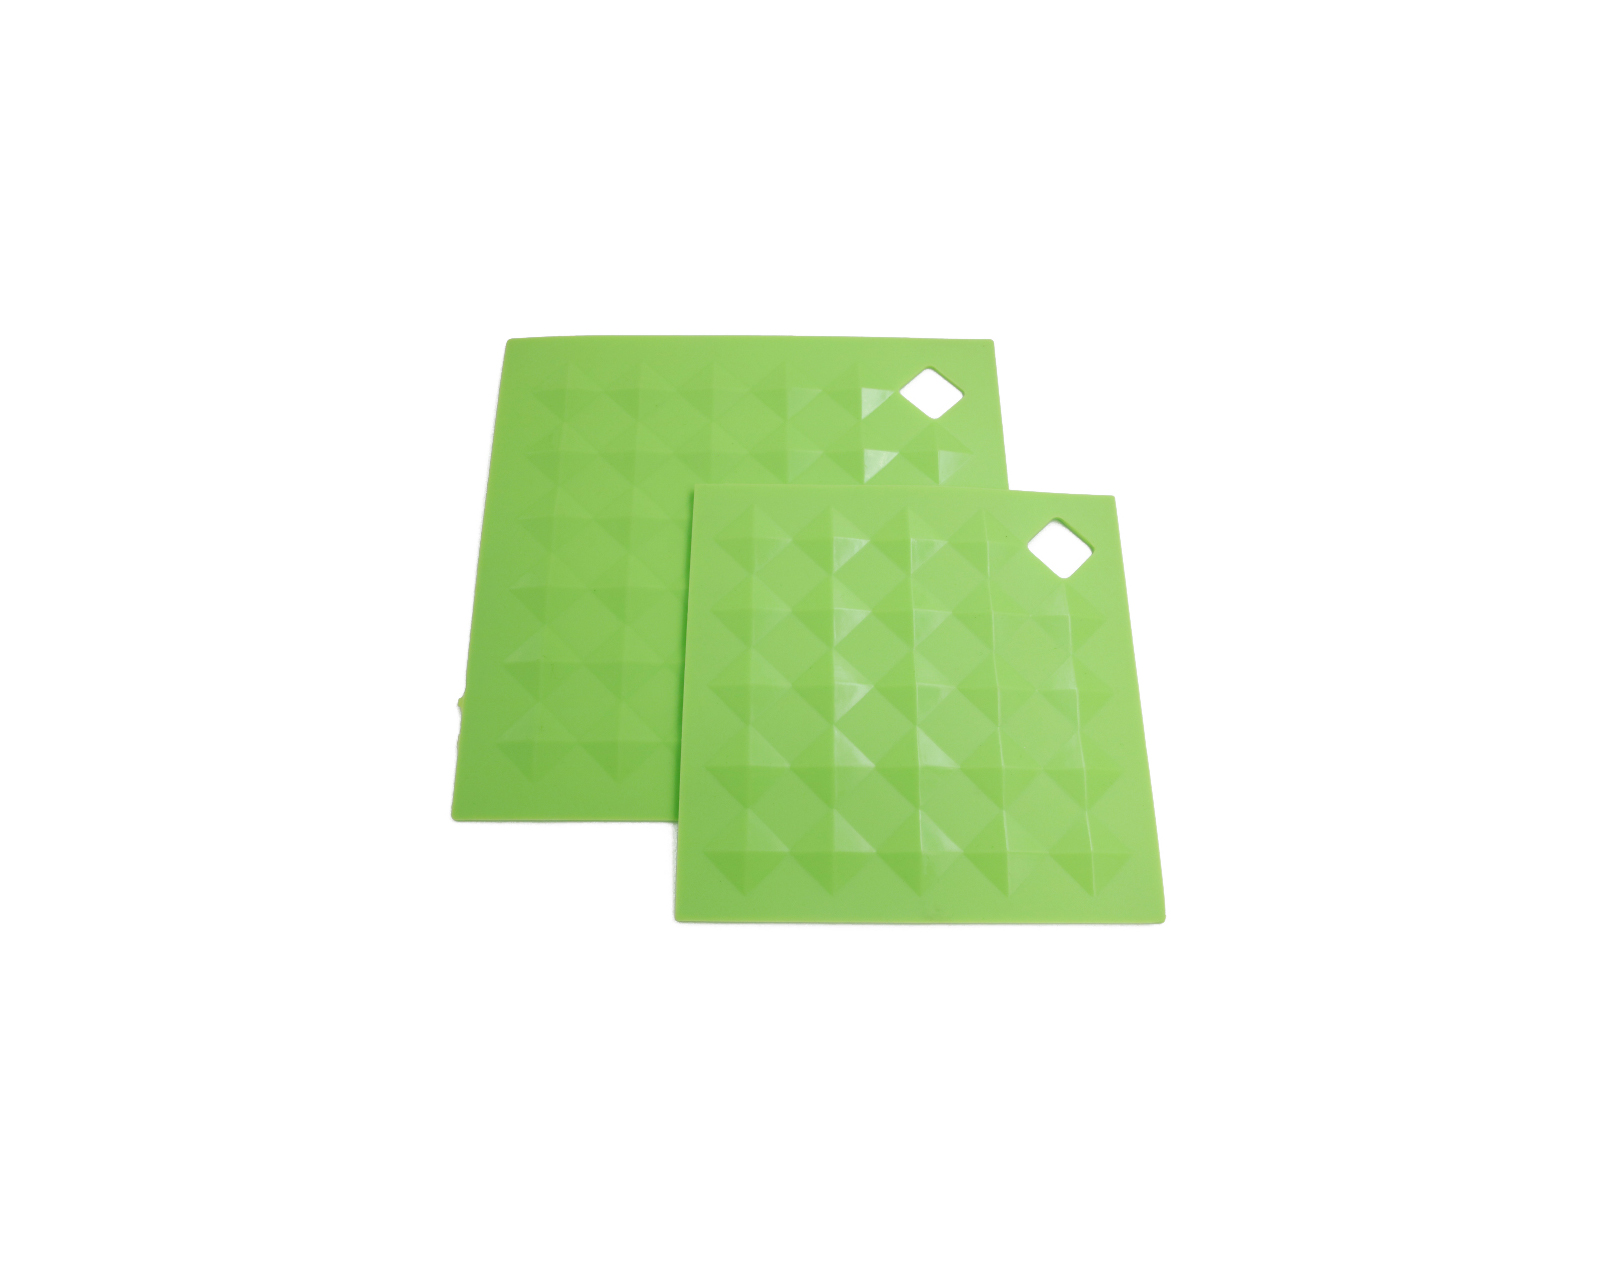 HI009 &HI010 Quadratische Matte (Groß & Klein) | Silikon Backmatte